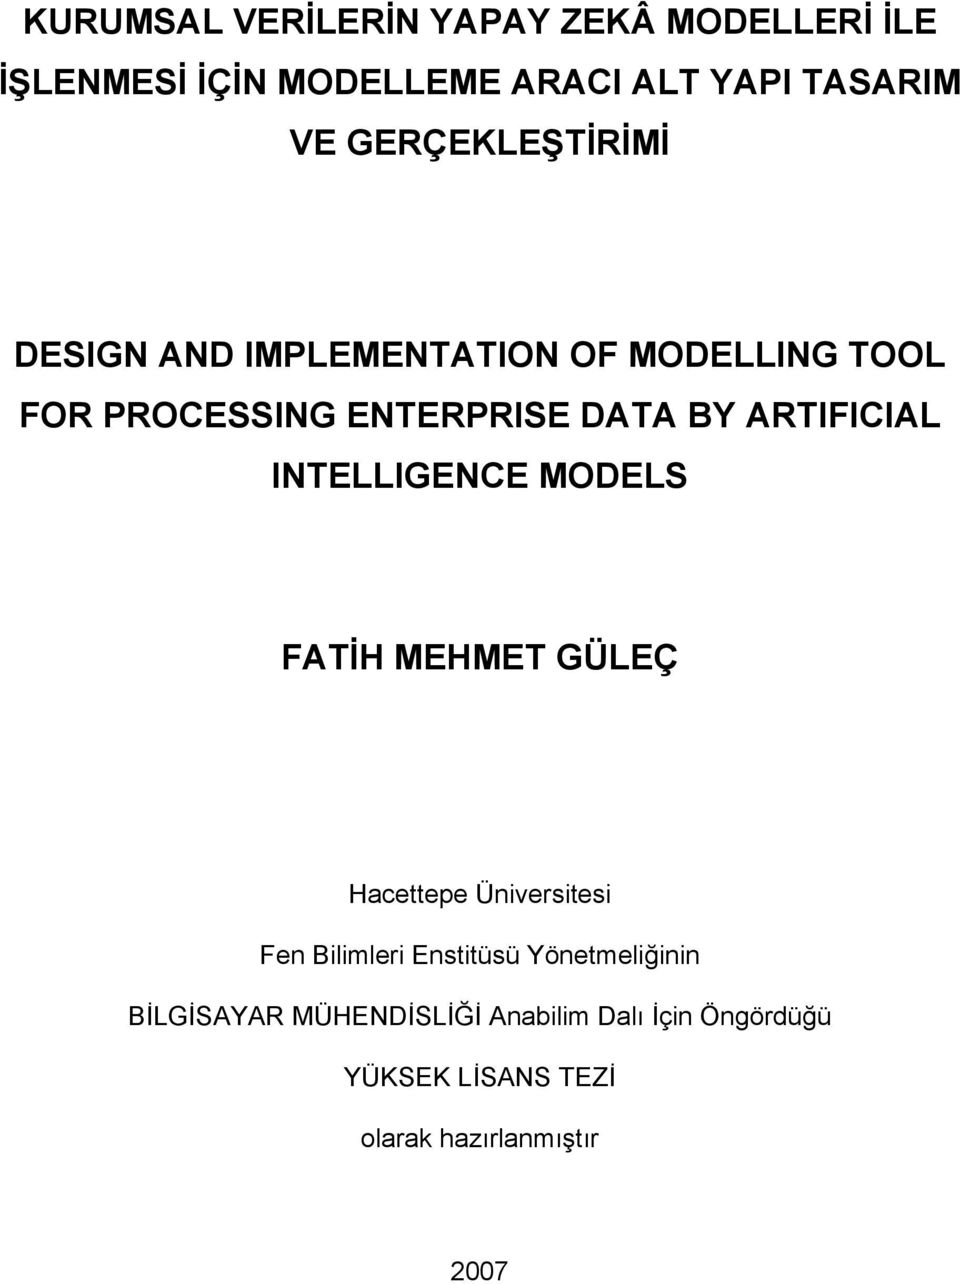 ARTIFICIAL INTELLIGENCE MODELS FATİH MEHMET GÜLEÇ Hacettepe Üniversitesi Fen Bilimleri Enstitüsü